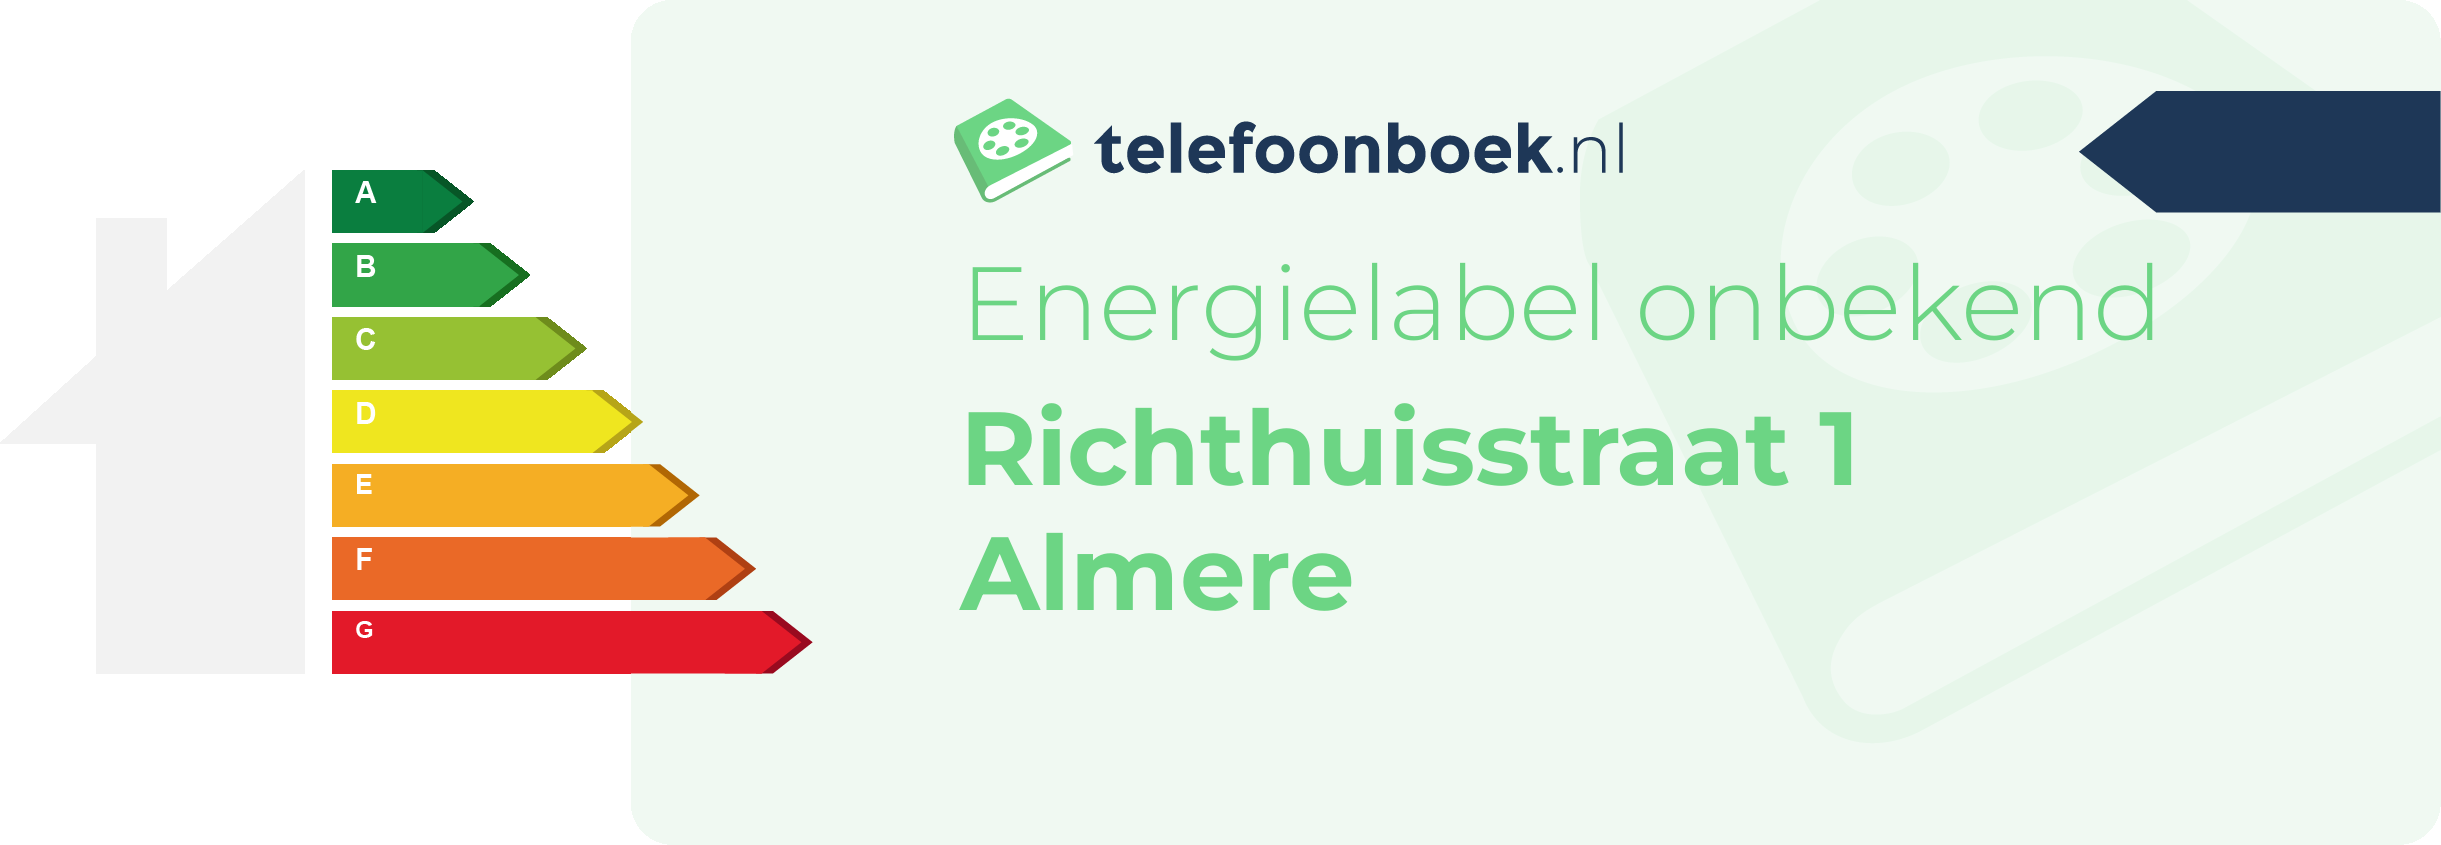 Energielabel Richthuisstraat 1 Almere